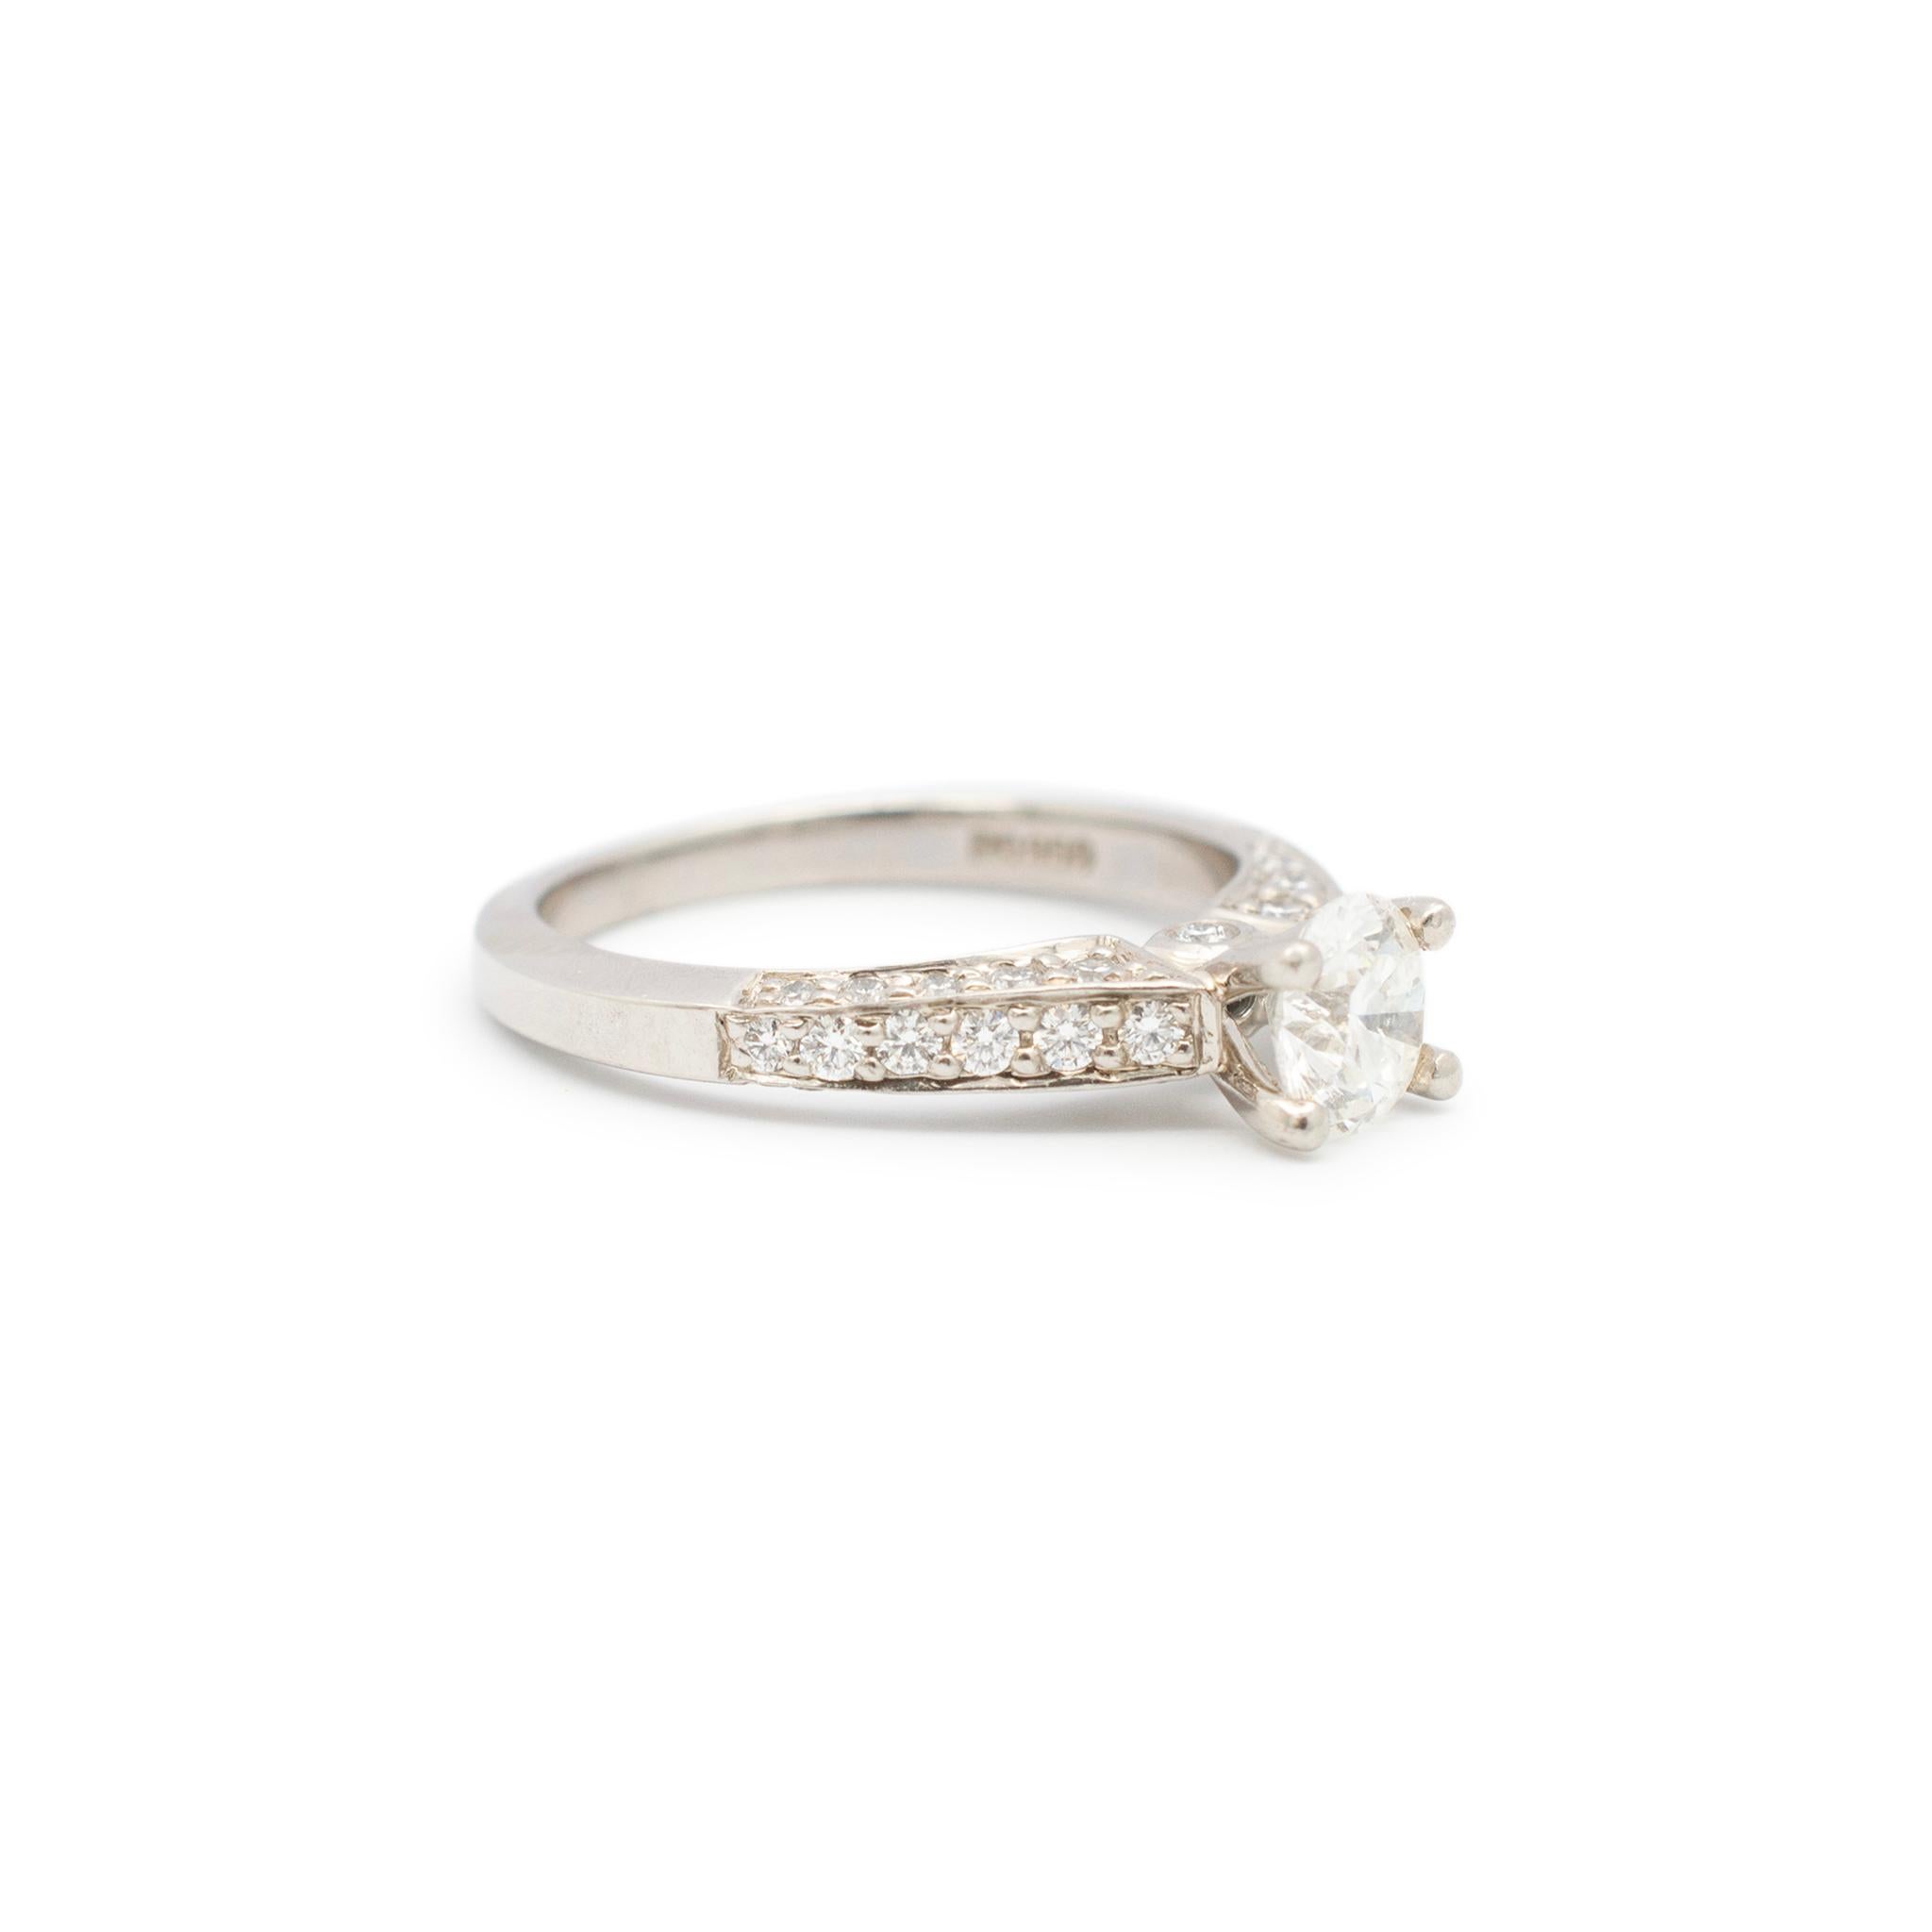 Ladies Scott Kay Palladium Diamond Engagement Ring In Excellent Condition For Sale In Houston, TX